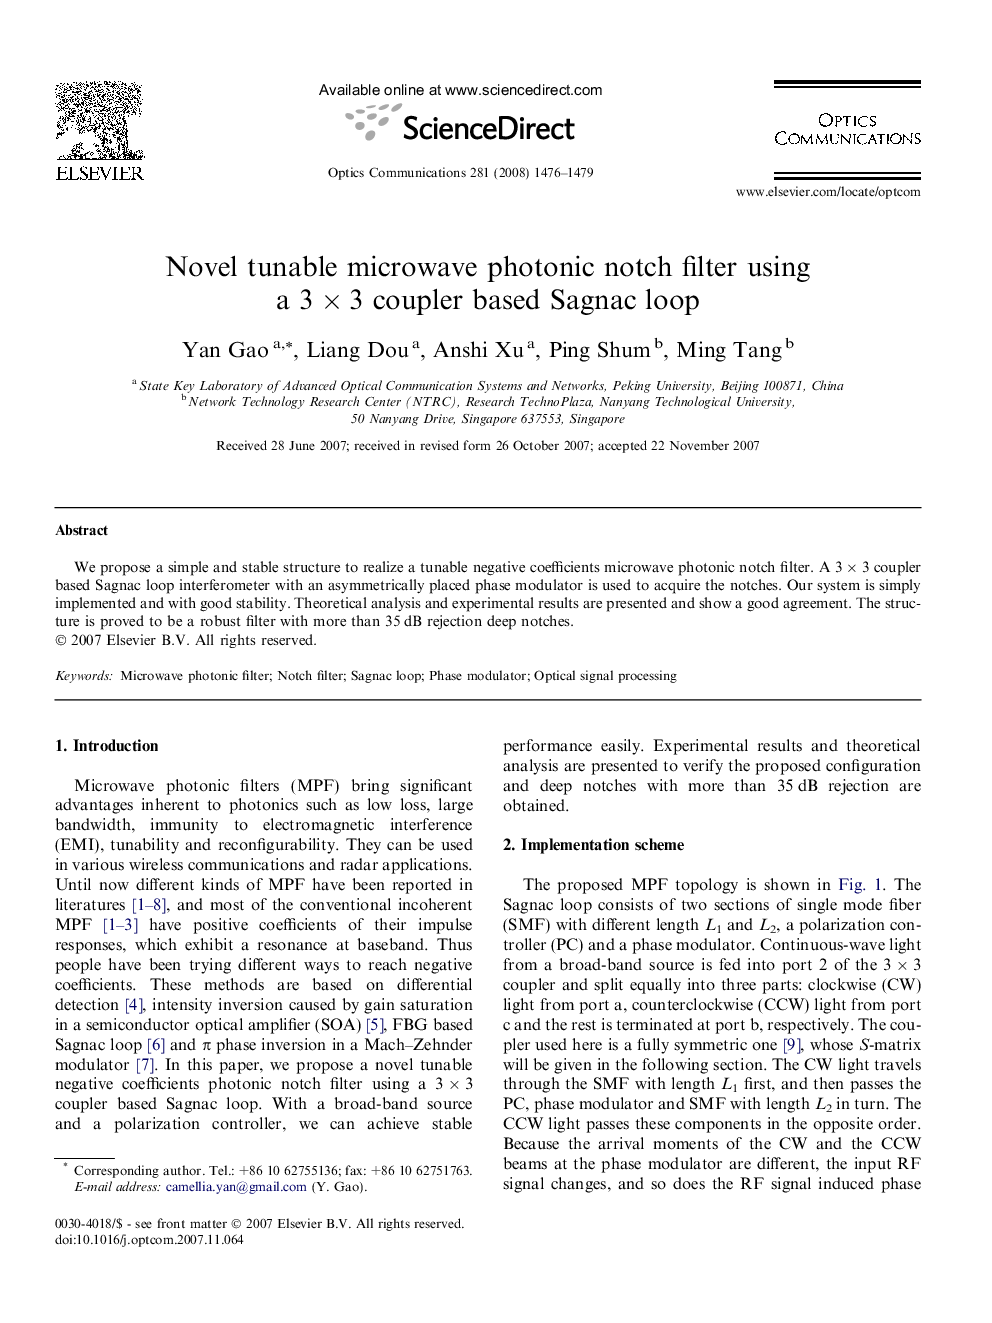 Novel tunable microwave photonic notch filter using a 3Â ÃÂ 3 coupler based Sagnac loop